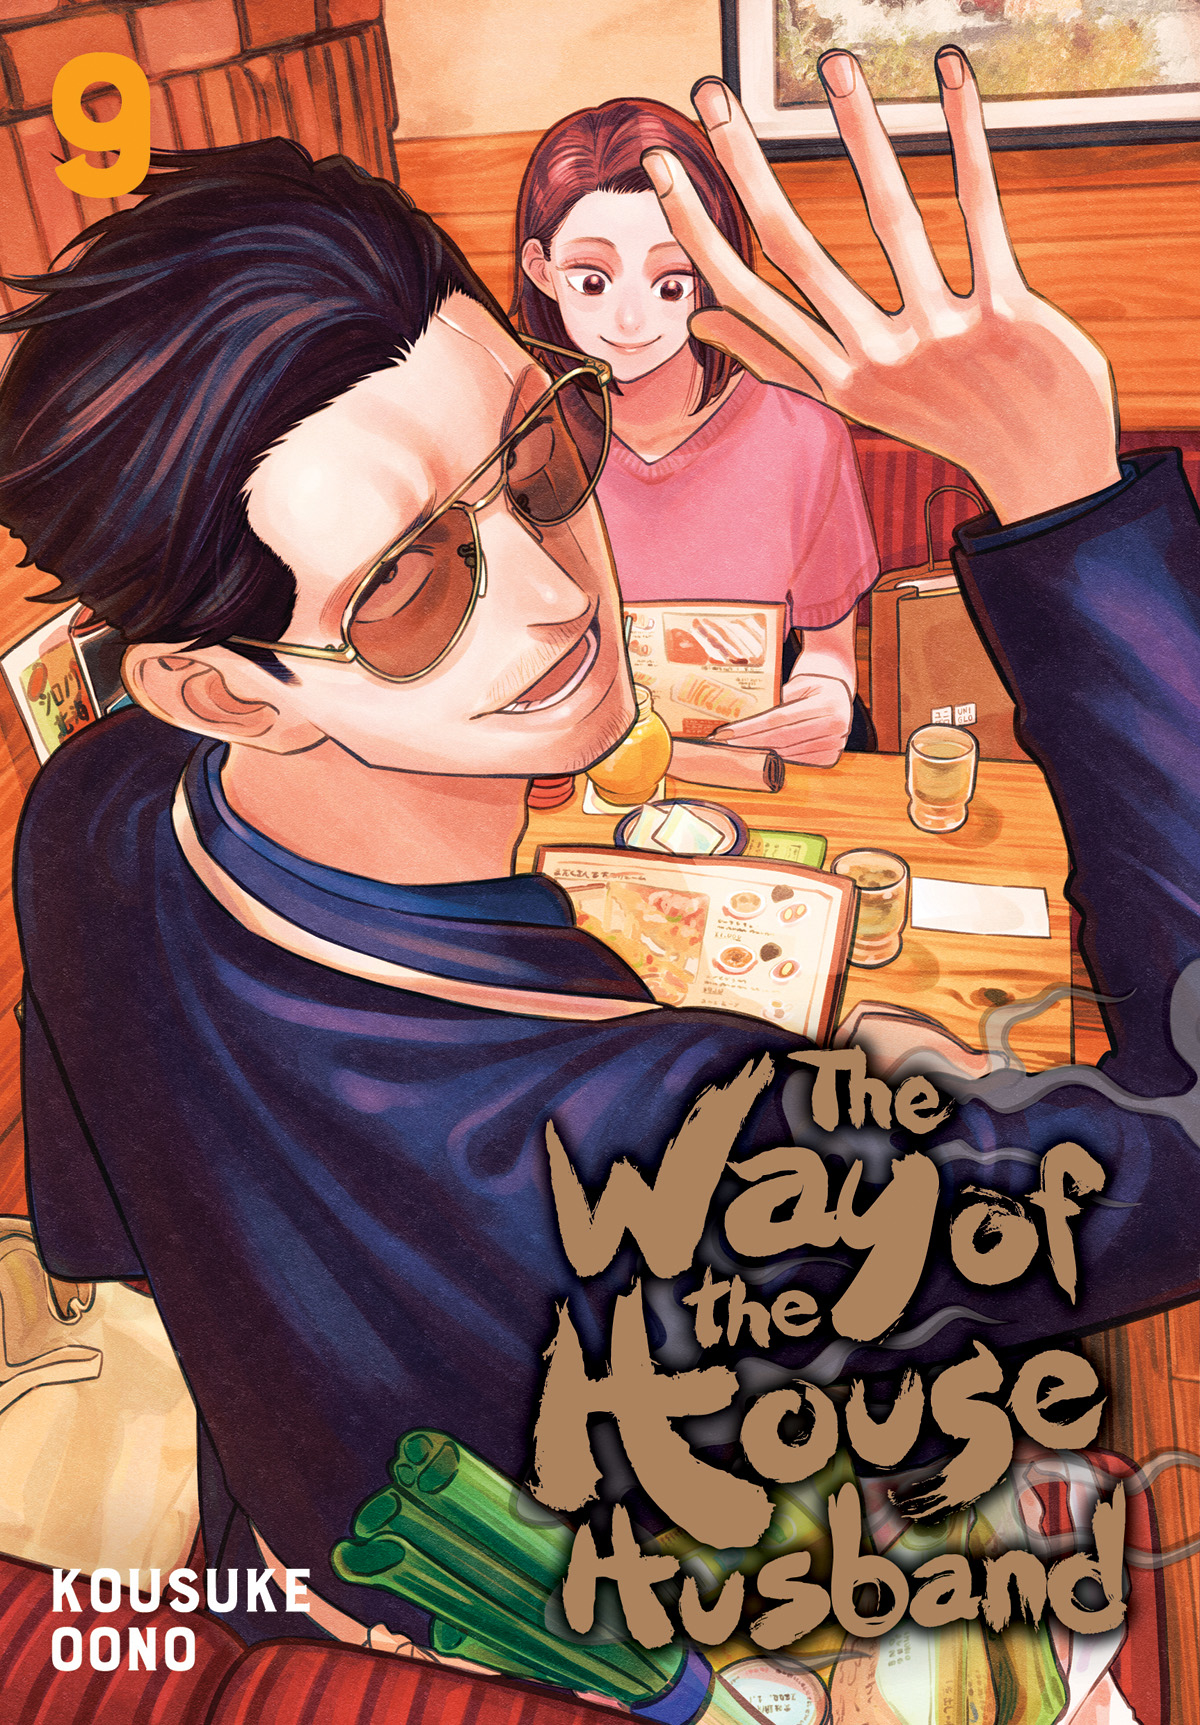 Way of the Househusband Manga Volume 9